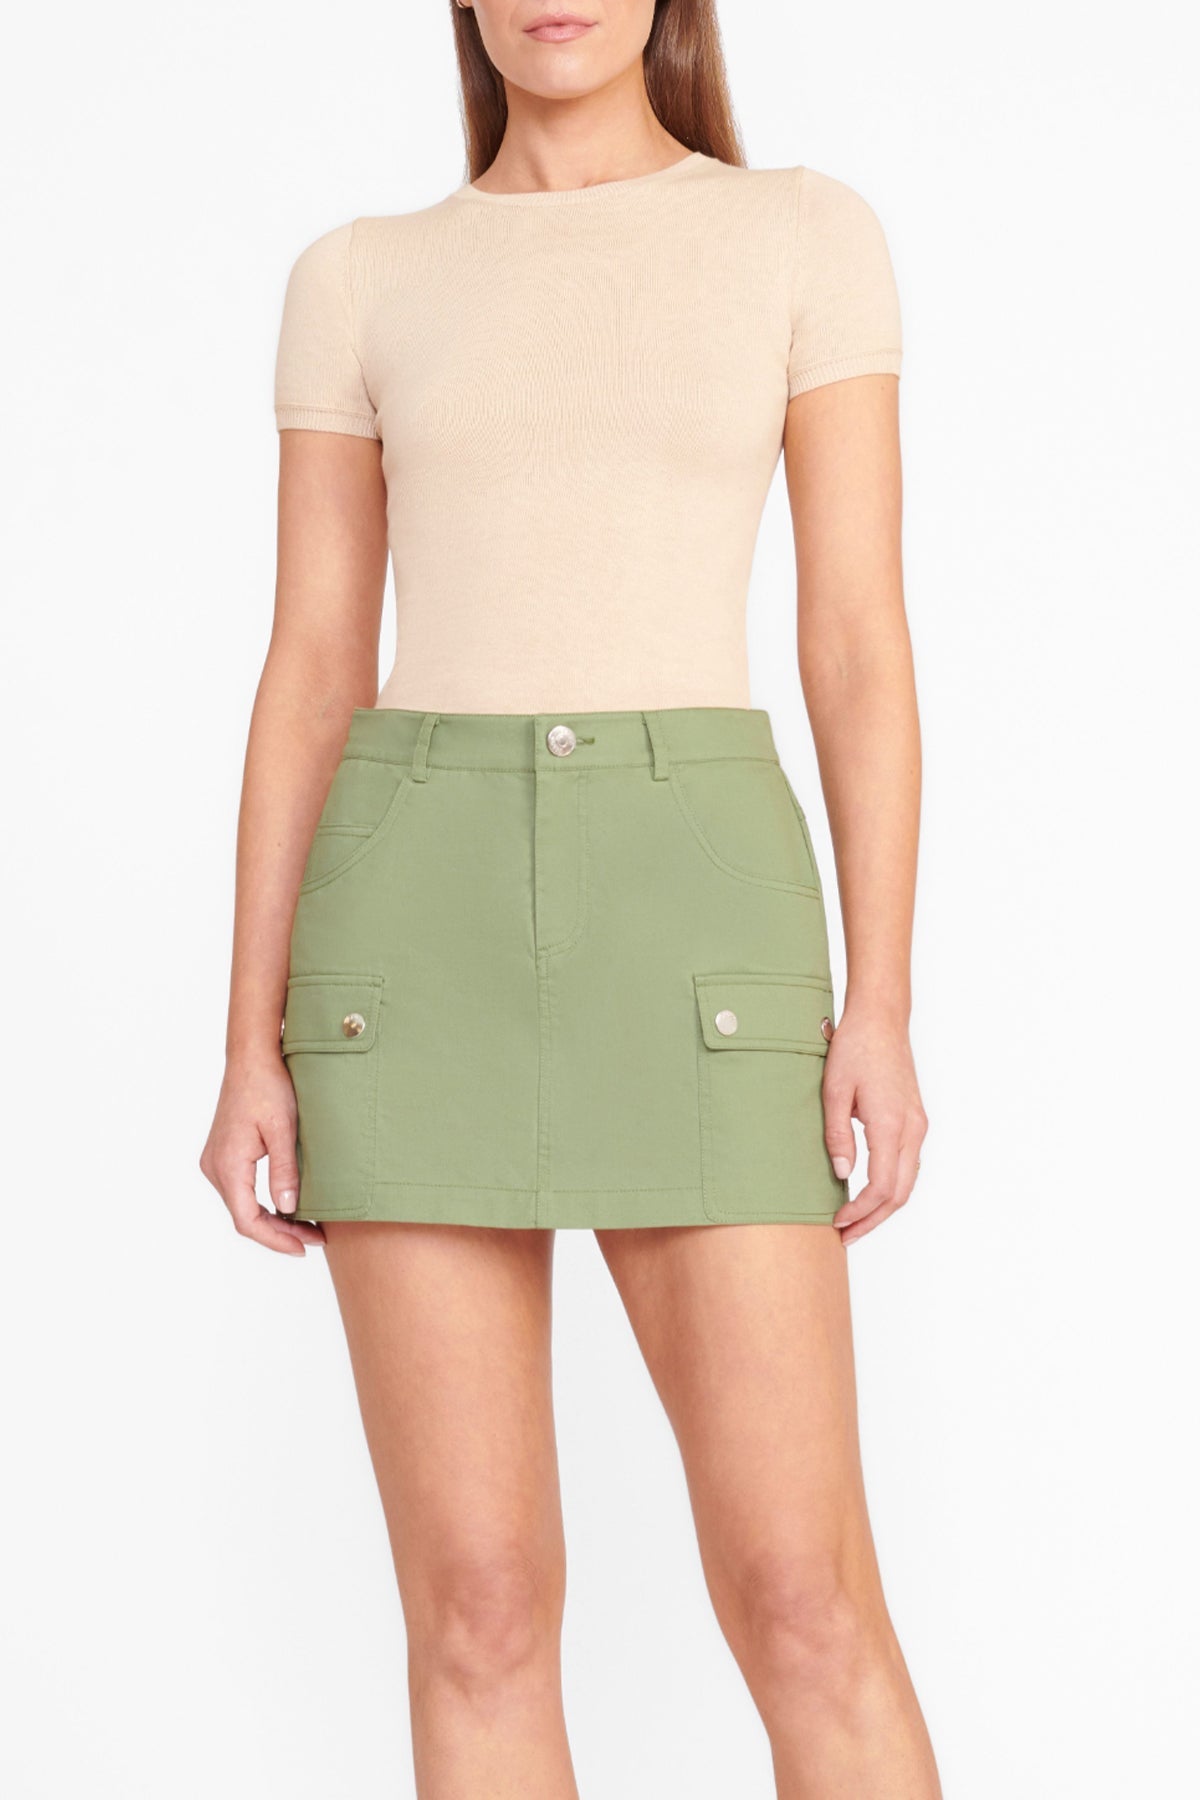 San Carlos Mini Skirt in Moss - shop-olivia.com